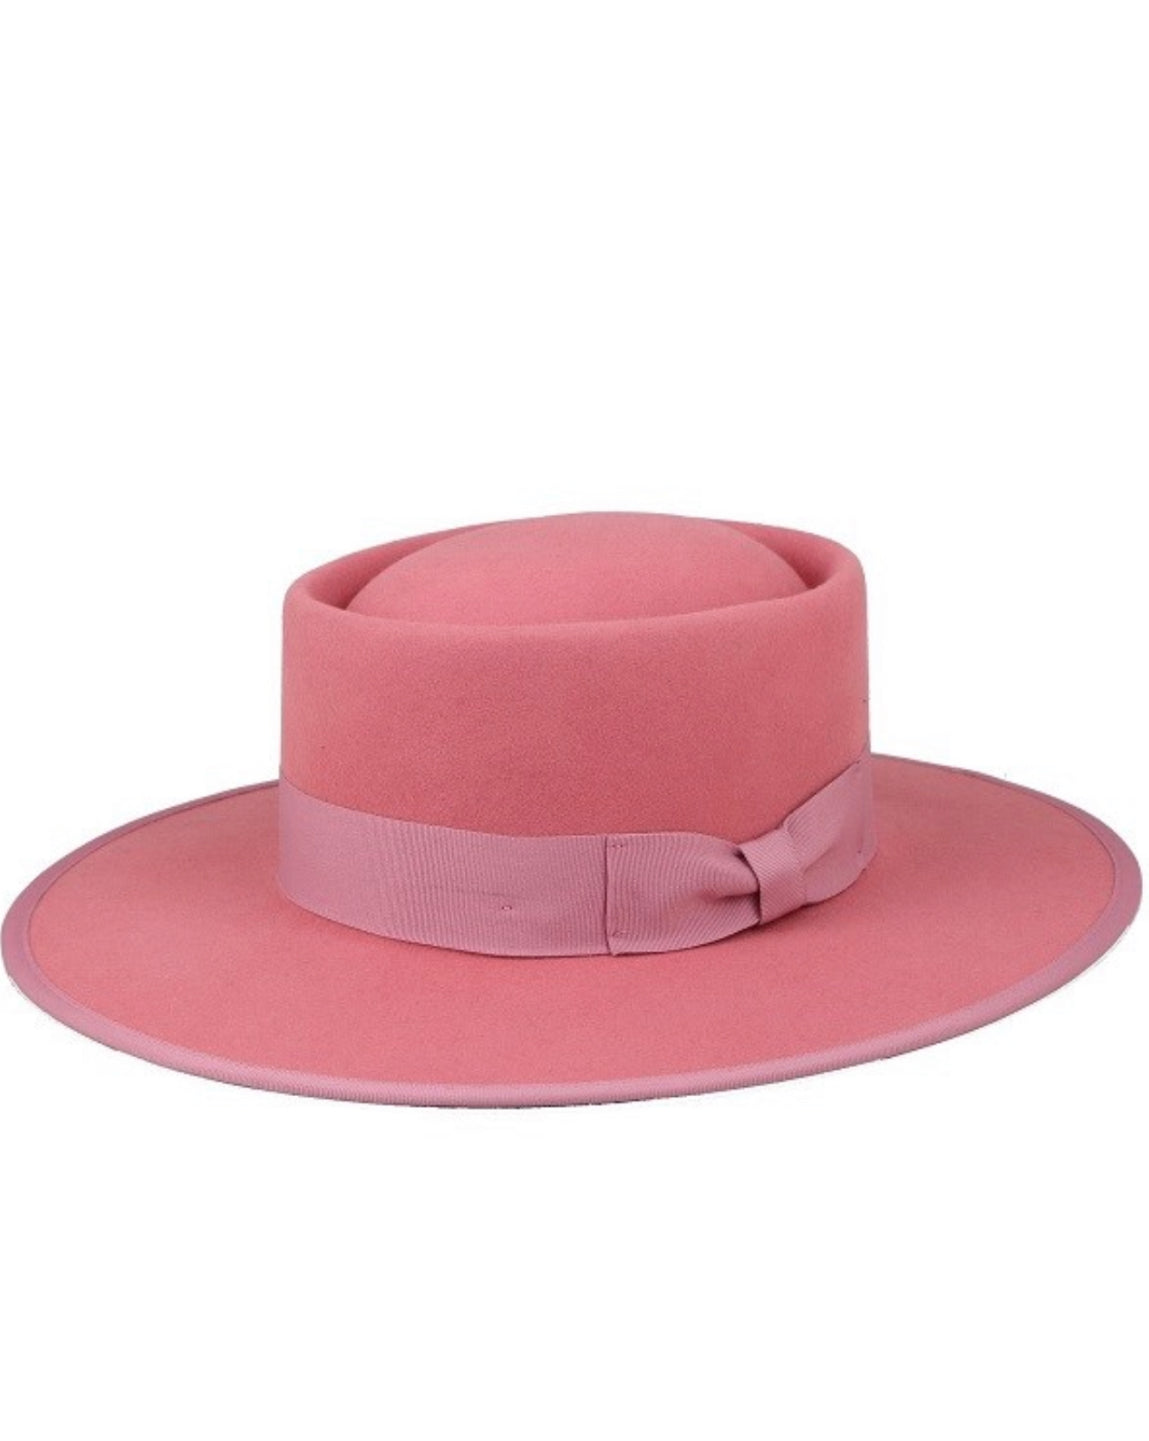 Kayo Boater Hat - Blush Pink